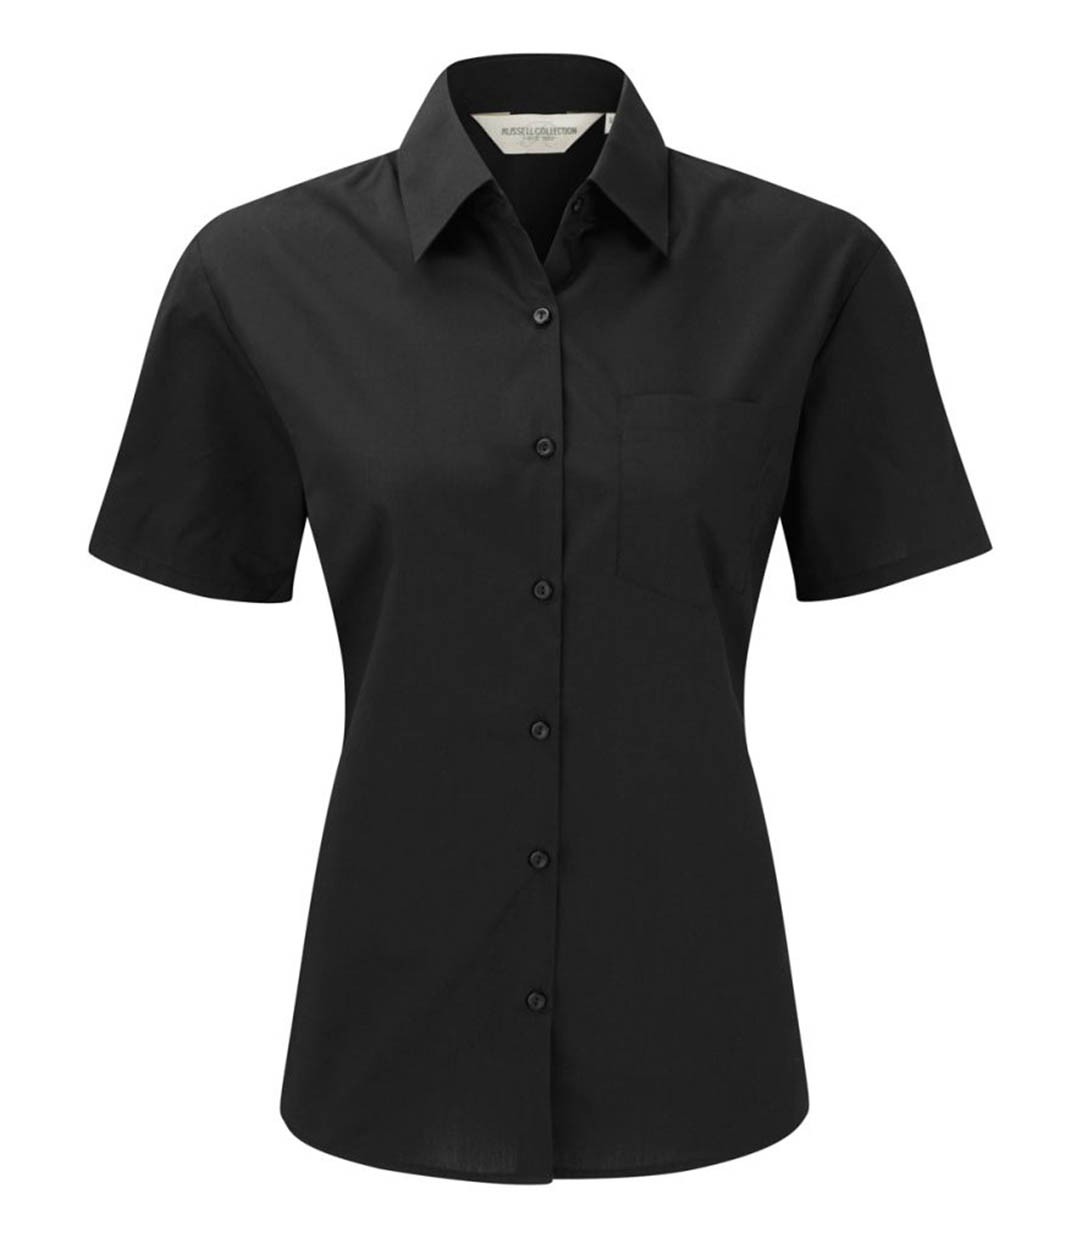 Russell Collection 935F Ladies Short Sleeve Shirt - Ladies Short Sleeve  Work Shirts - Work Shirts - Shirts - Leisurewear - Best Workwear